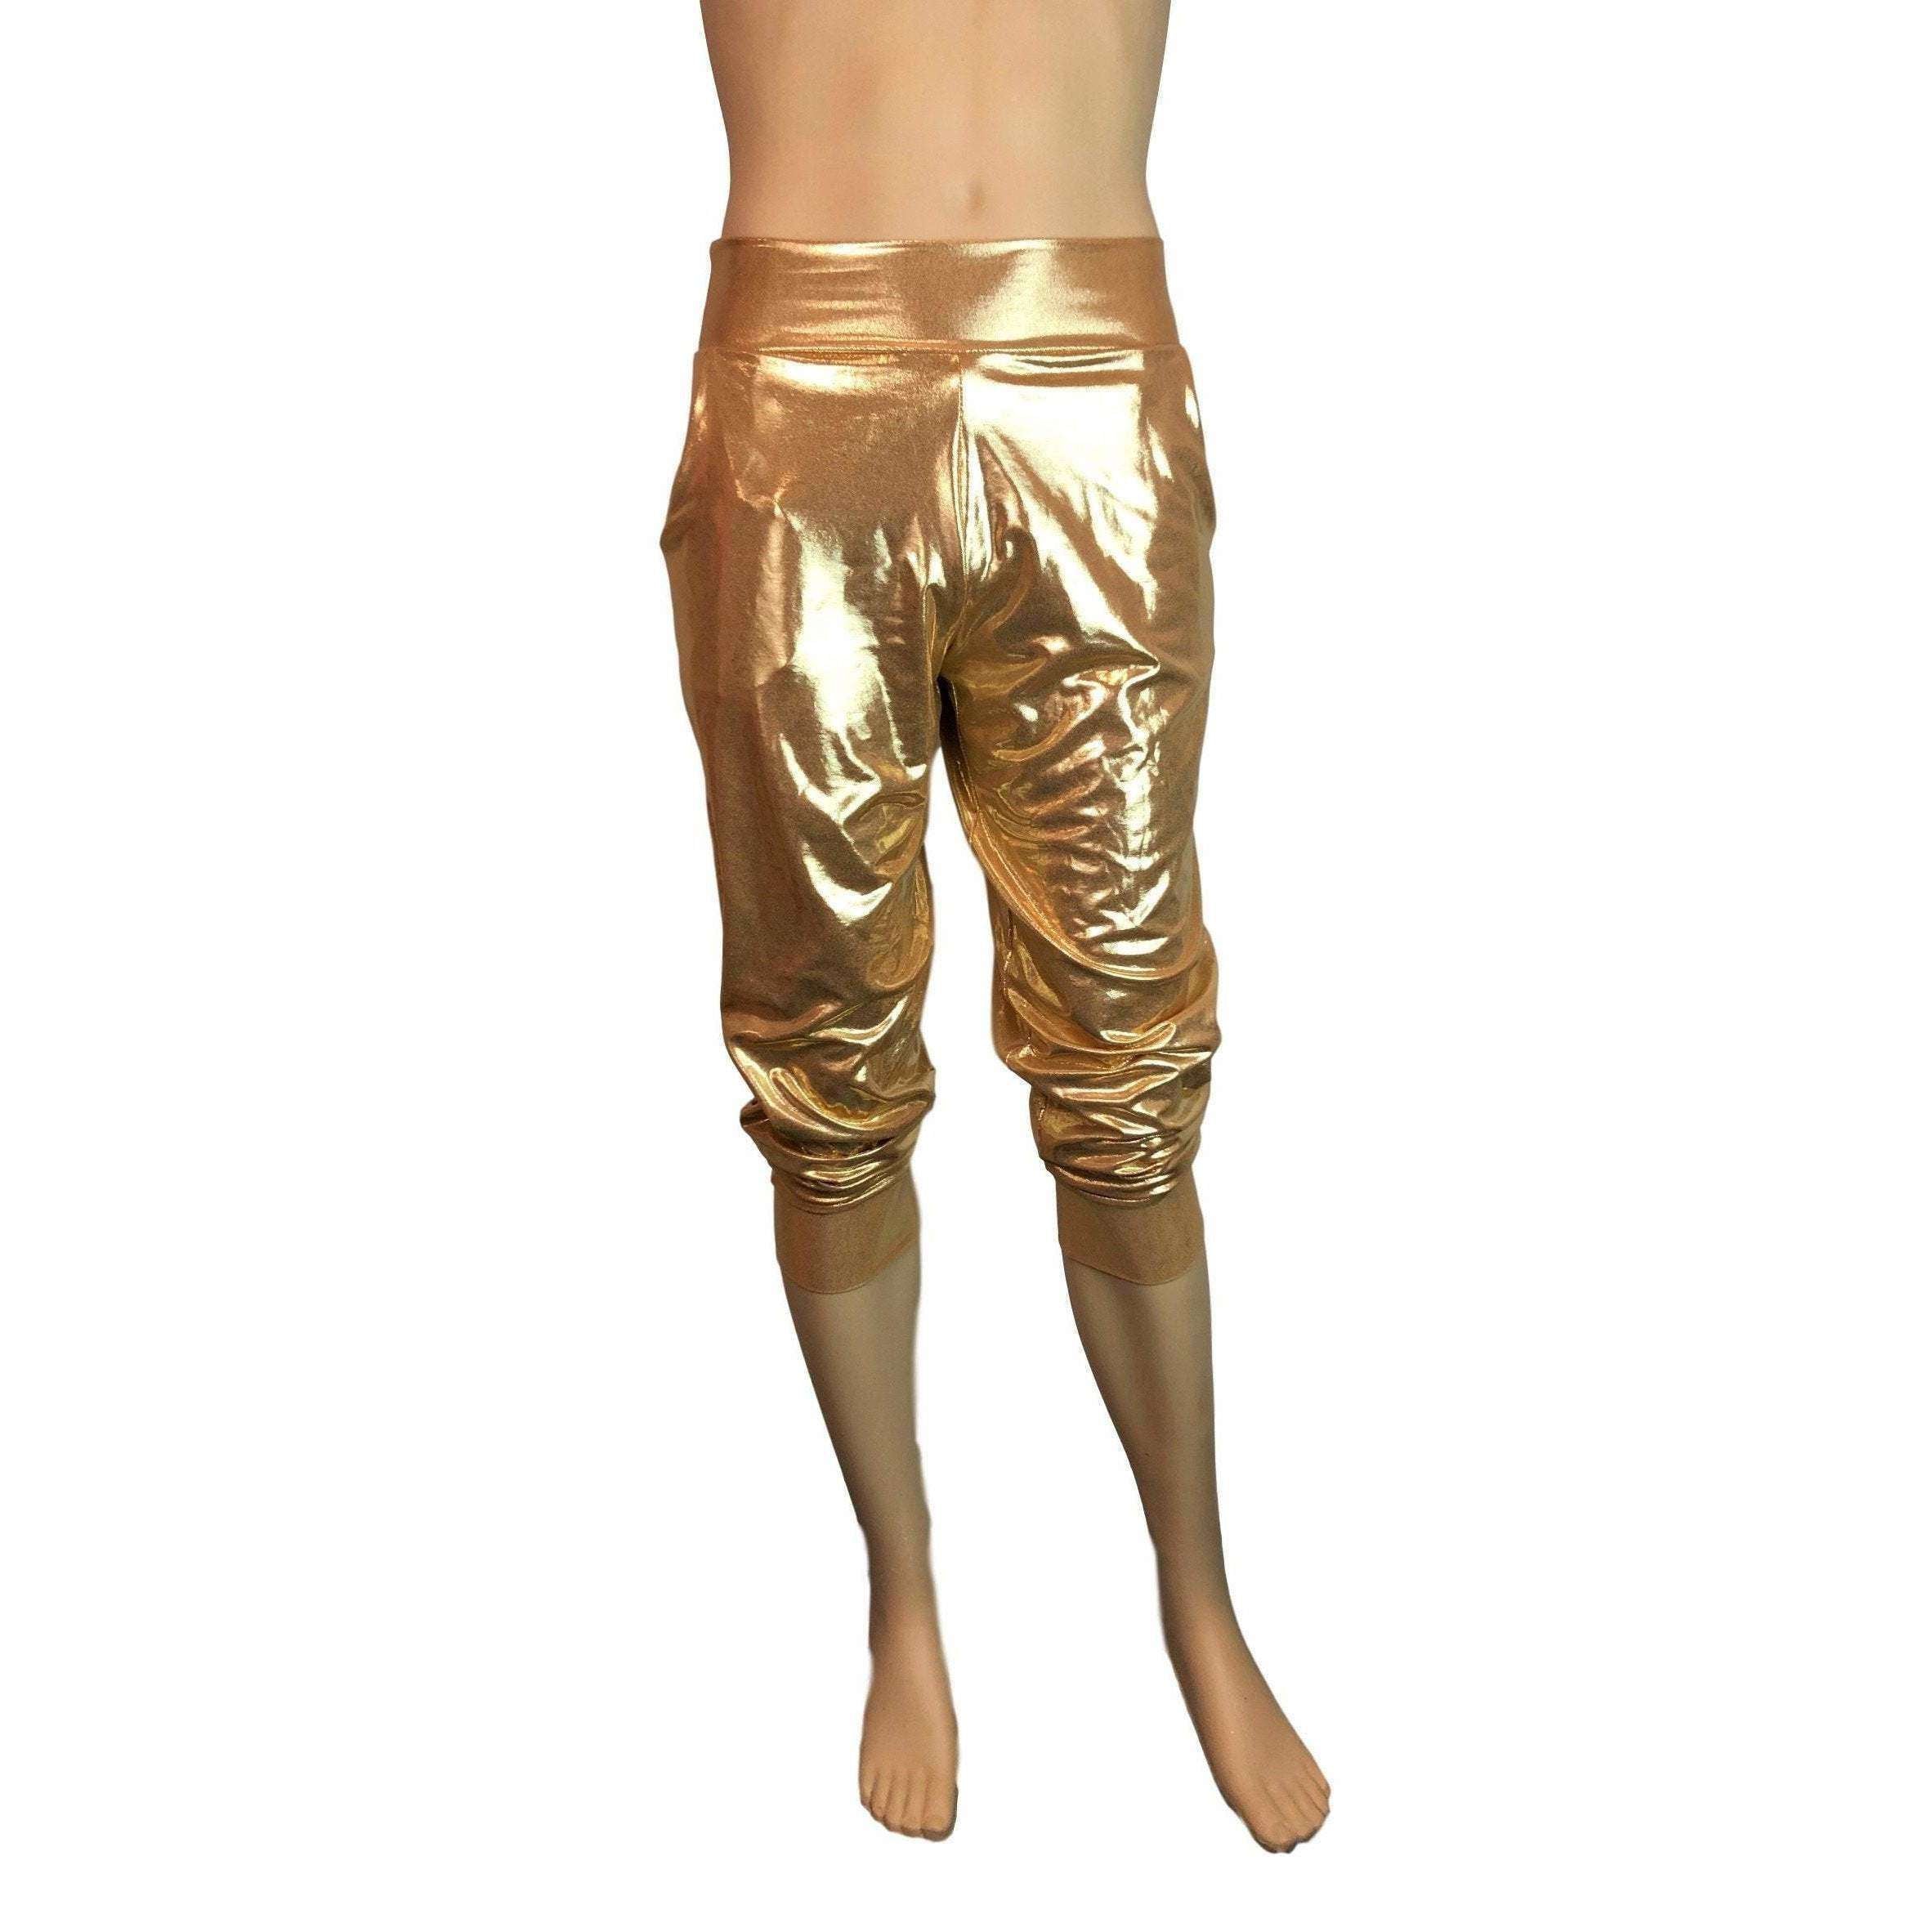 Mens gold dress pants, wide leg slacks